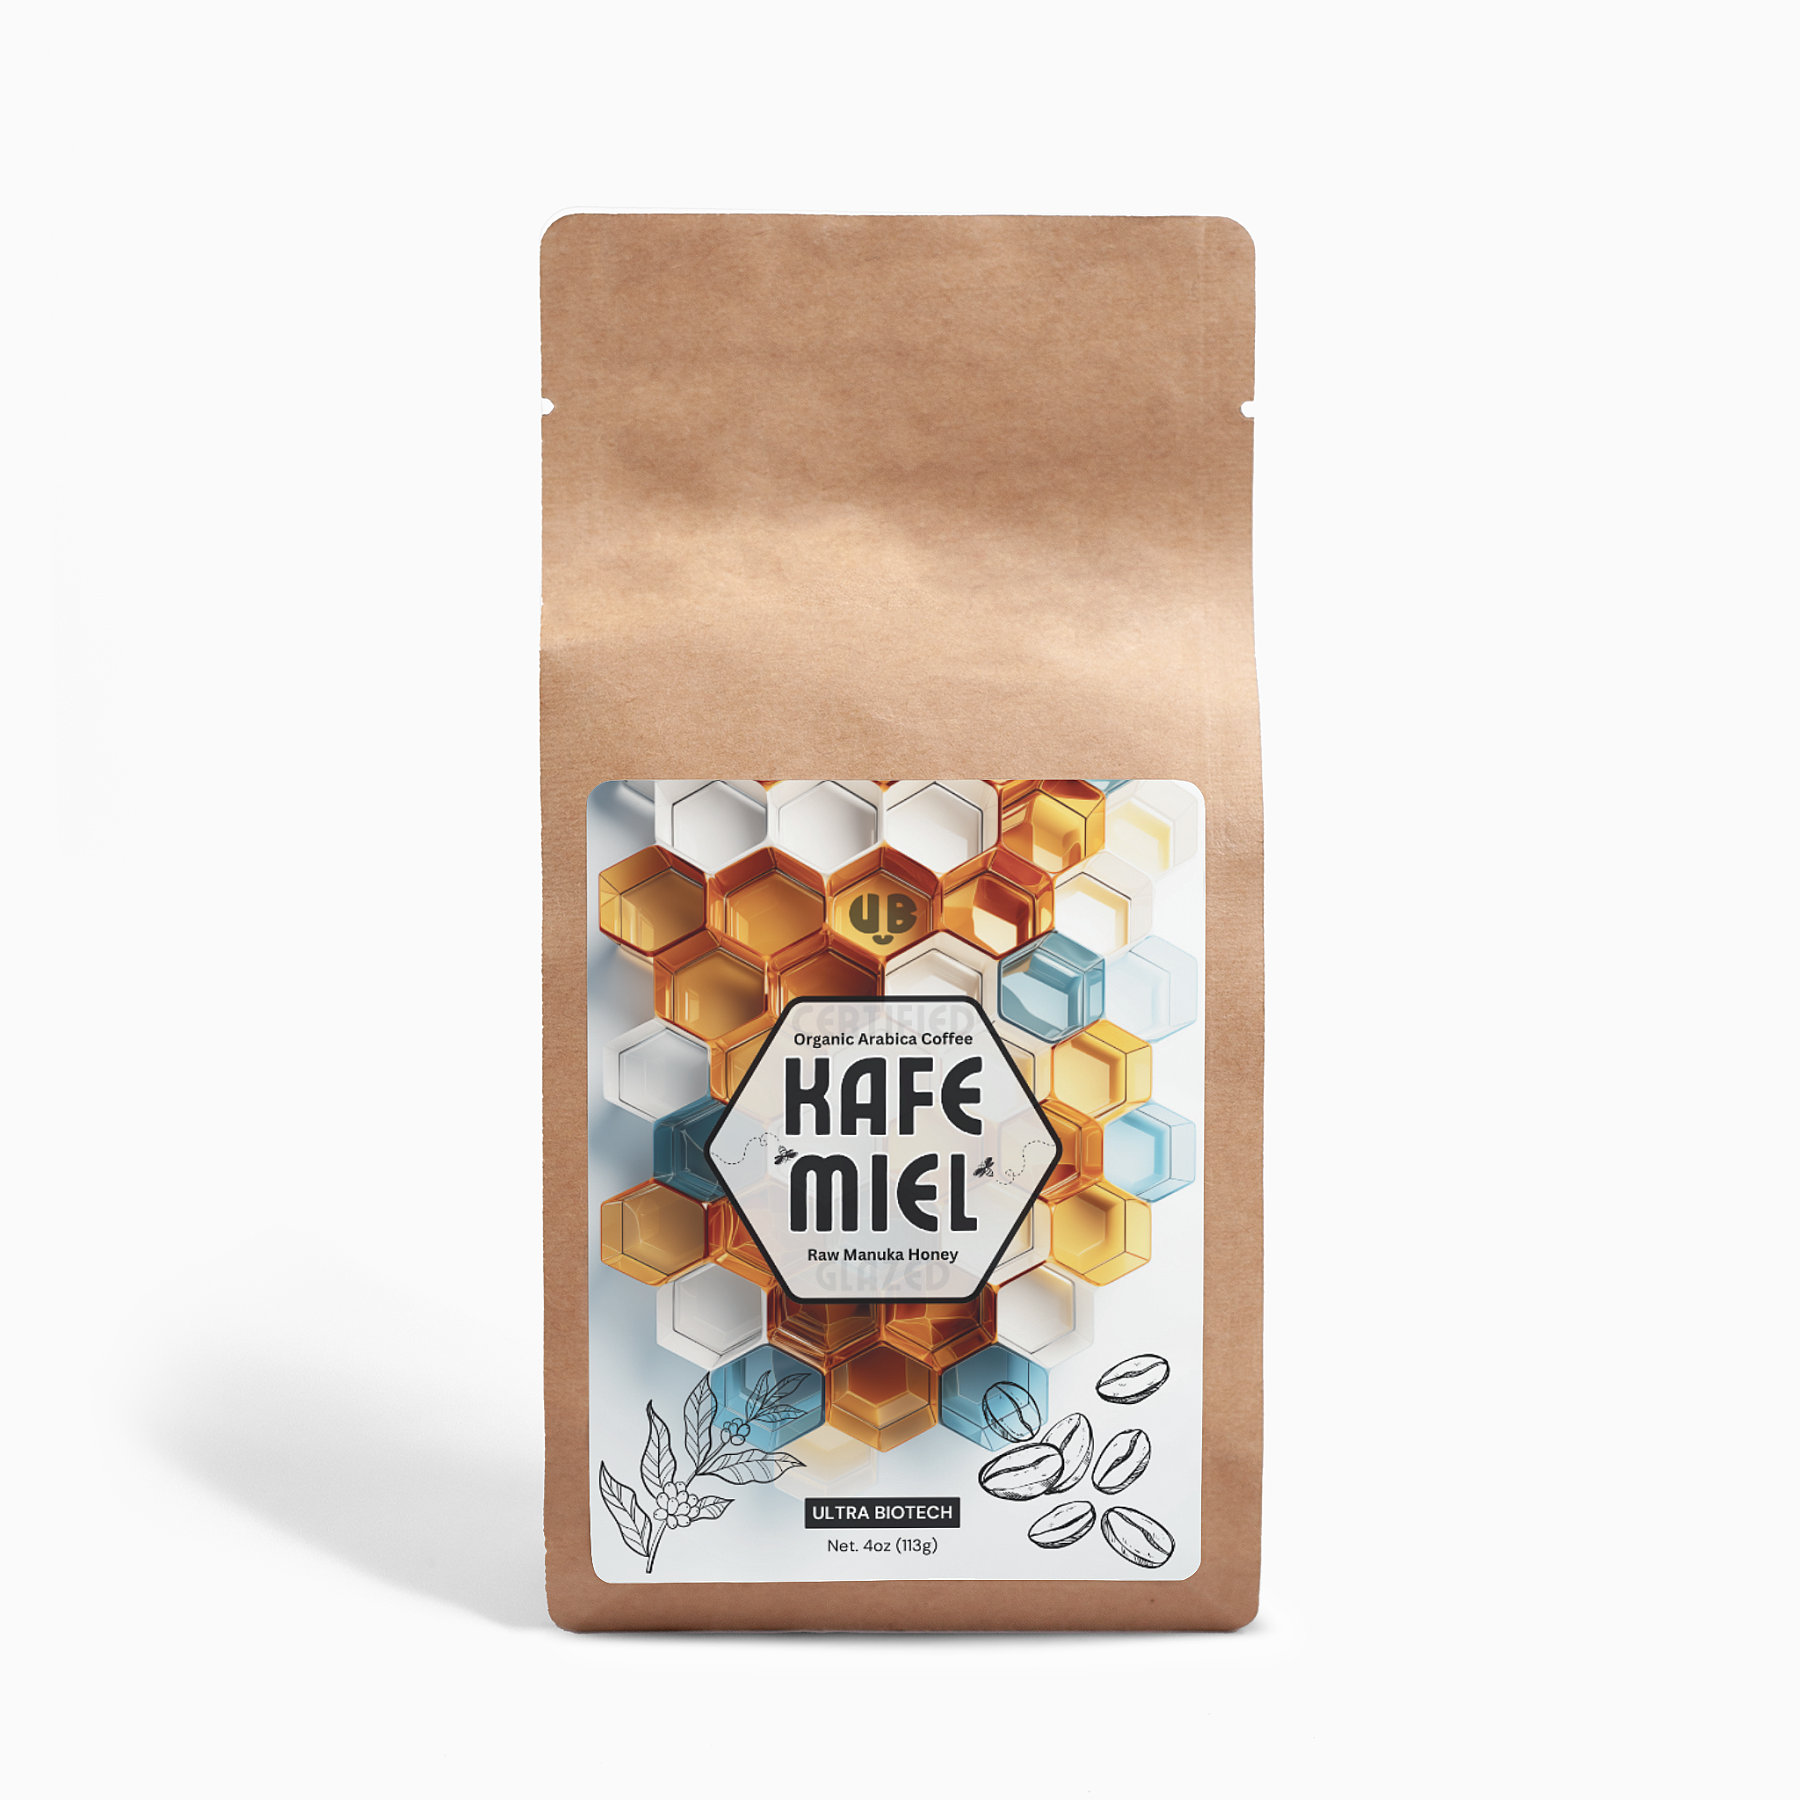 UB Kafe Miel - organic arabica coffee beans glazed in raw new zealand manuka honey